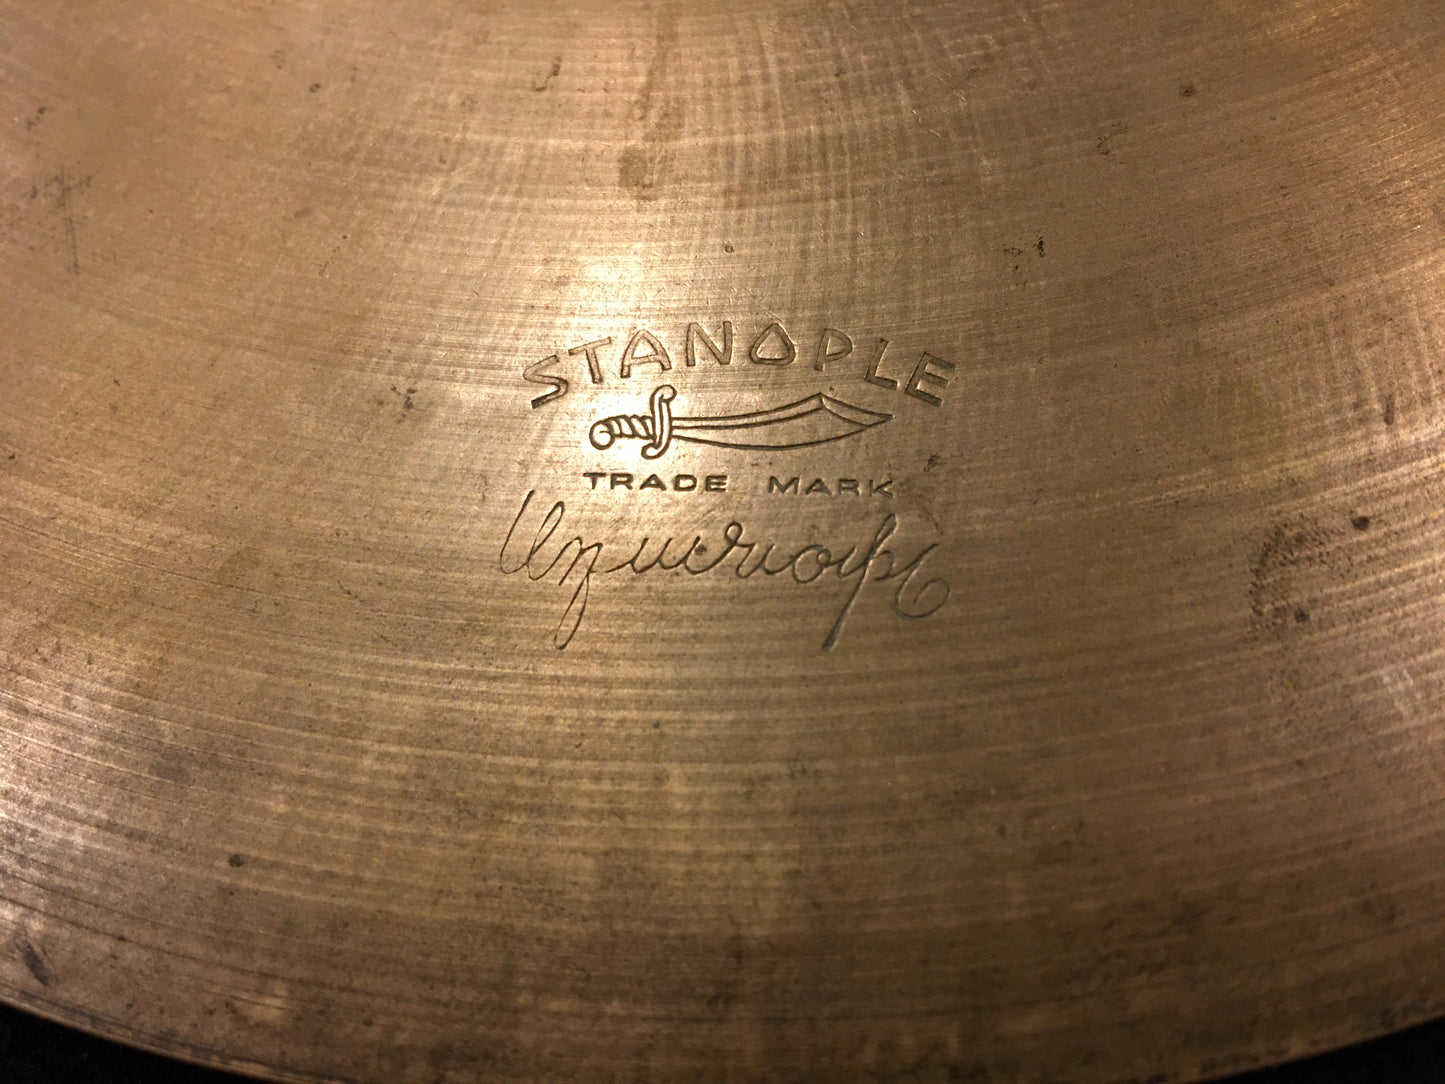 10" Stanople Uzuiriope 1930s Leedy Splash Trap Cymbal 266g #695